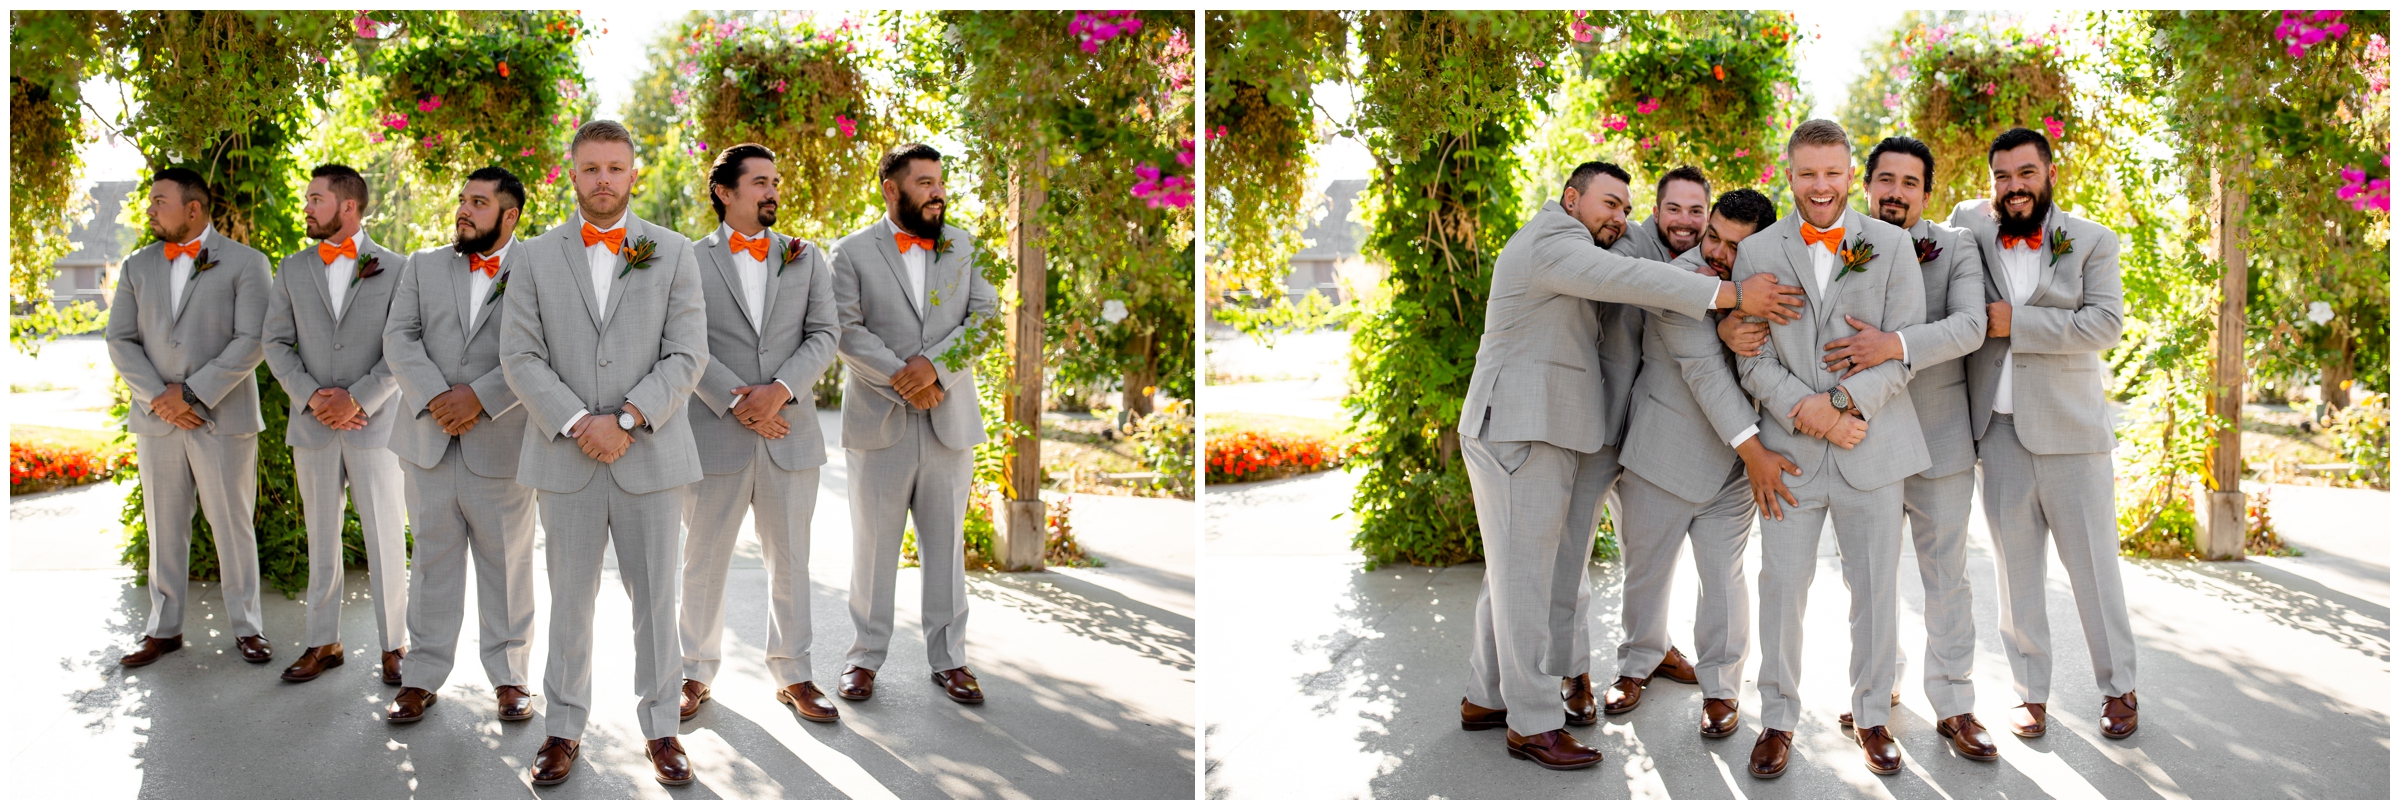 groomsmen in gray and orange tackling groom during Colorado wedding pictures 